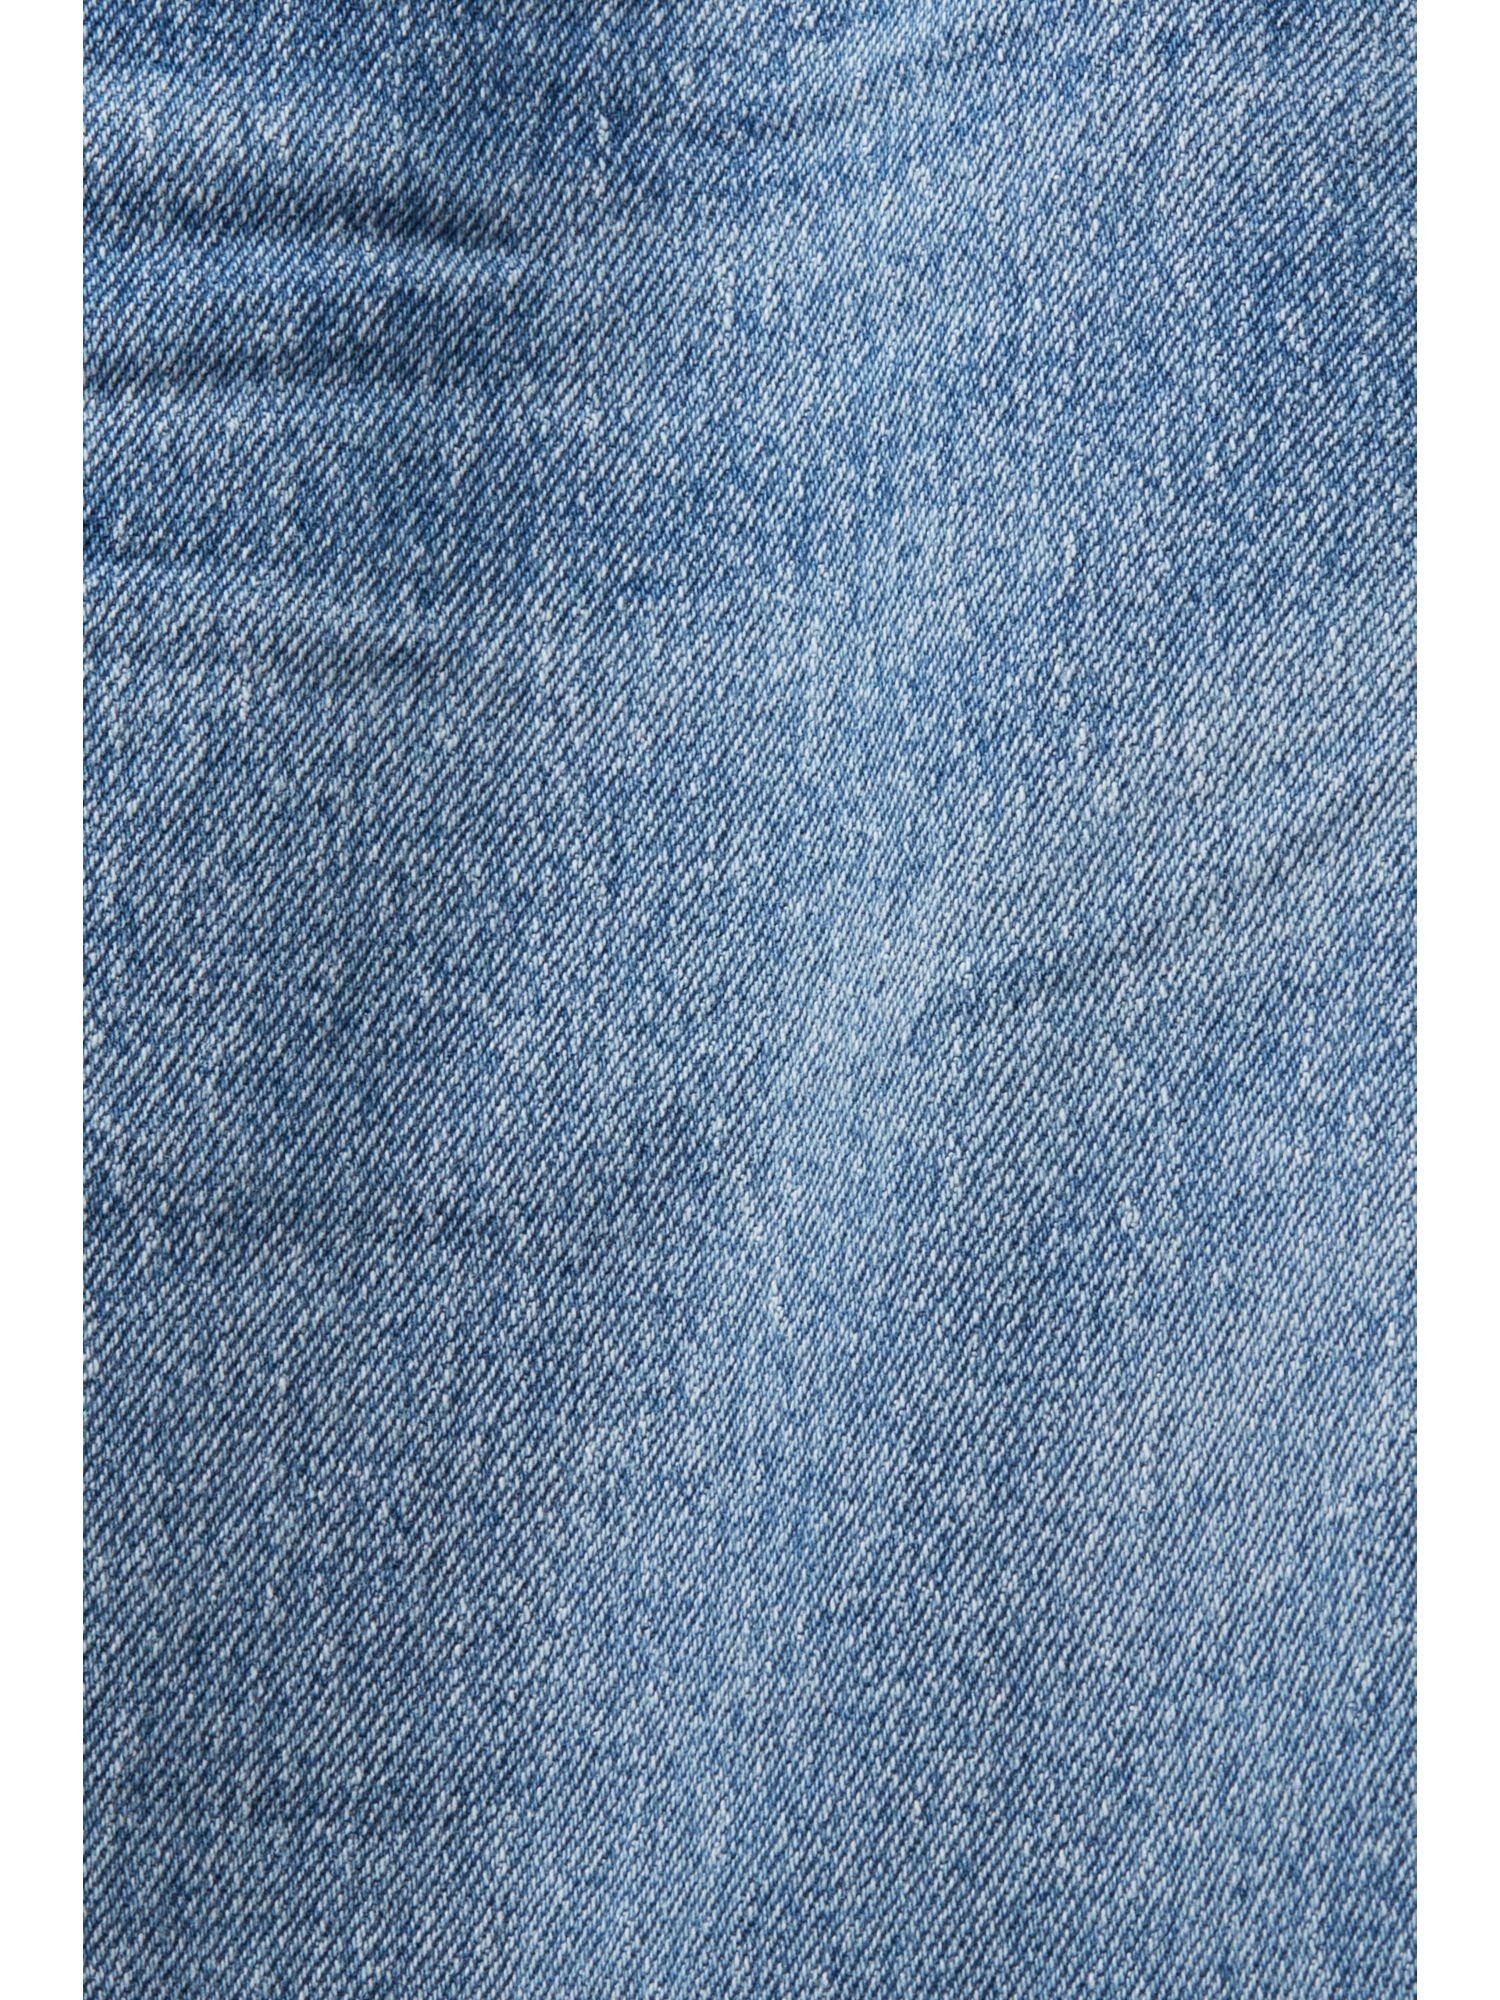 MEDIUM Jeansshorts Jeans-Bermudashorts by BLUE WASHED Esprit edc